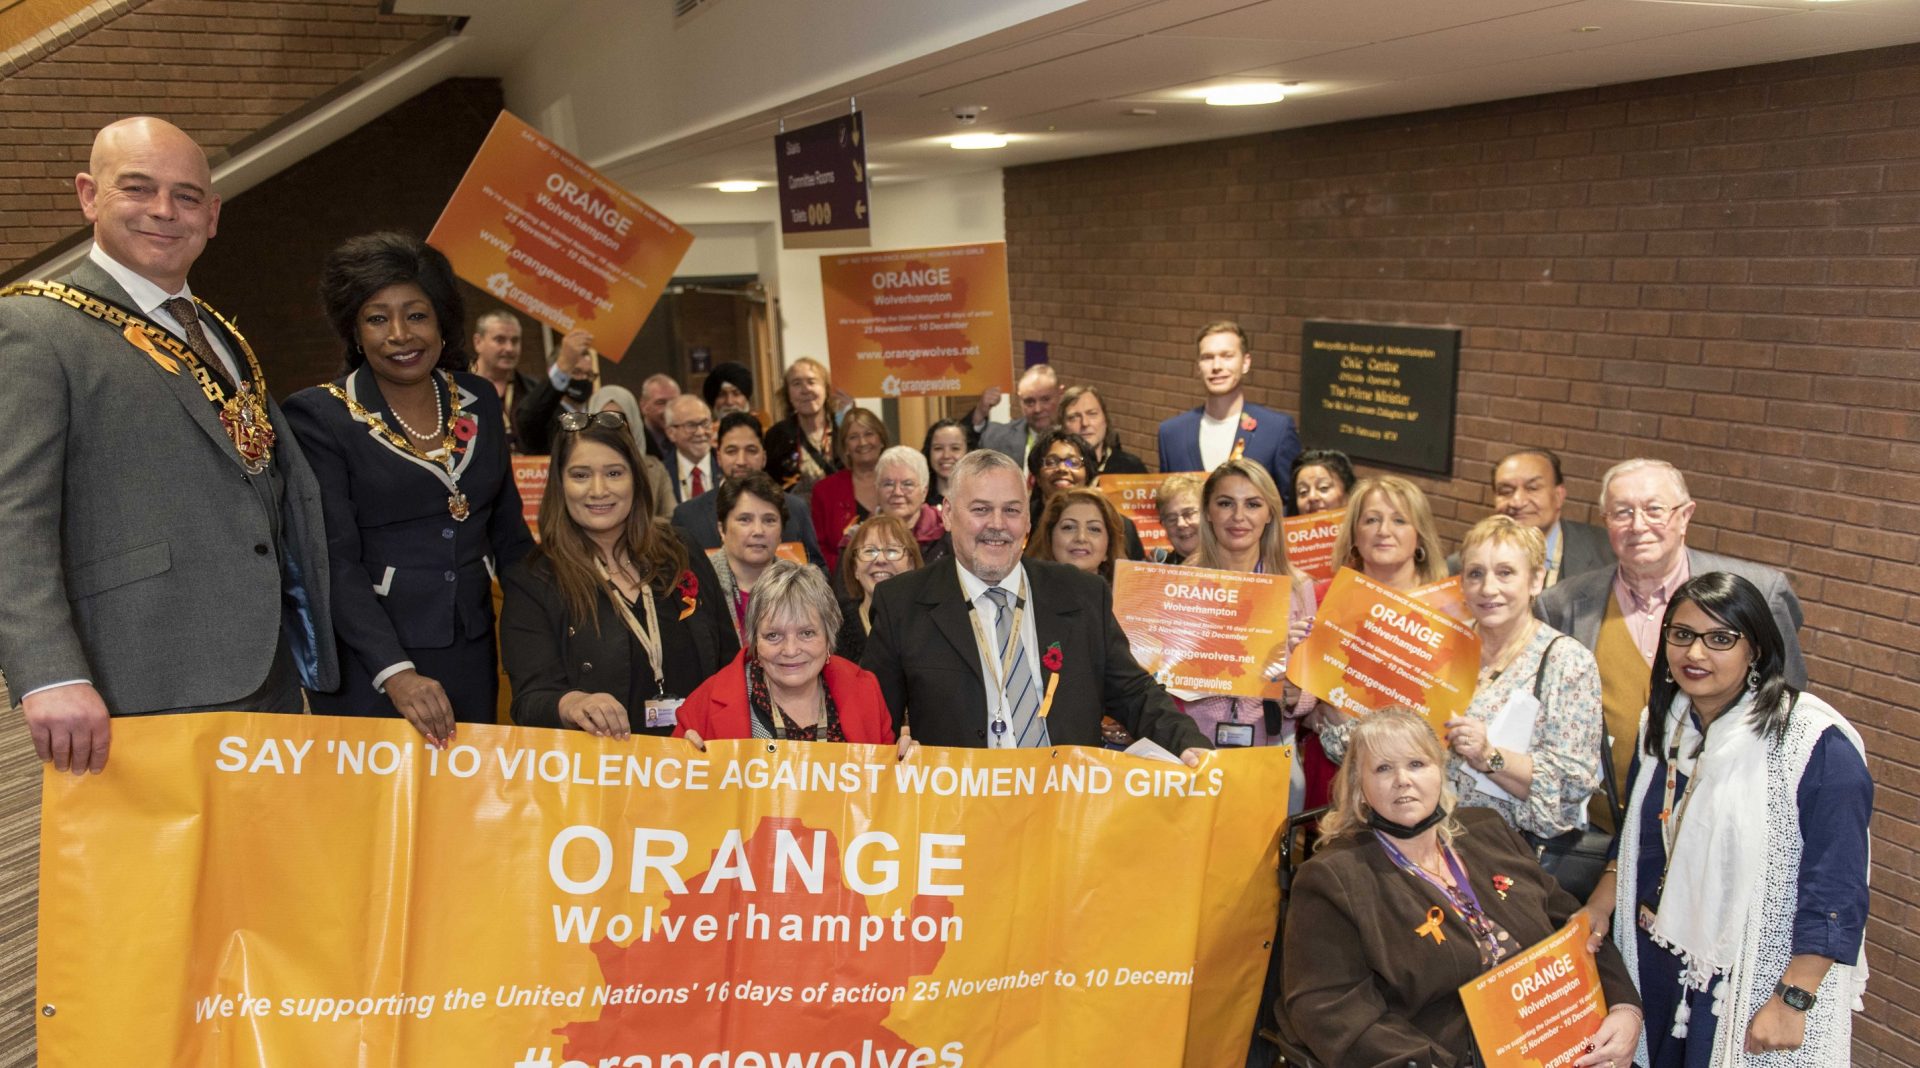 Labour Group backs Orange Wolves safeguarding campaign